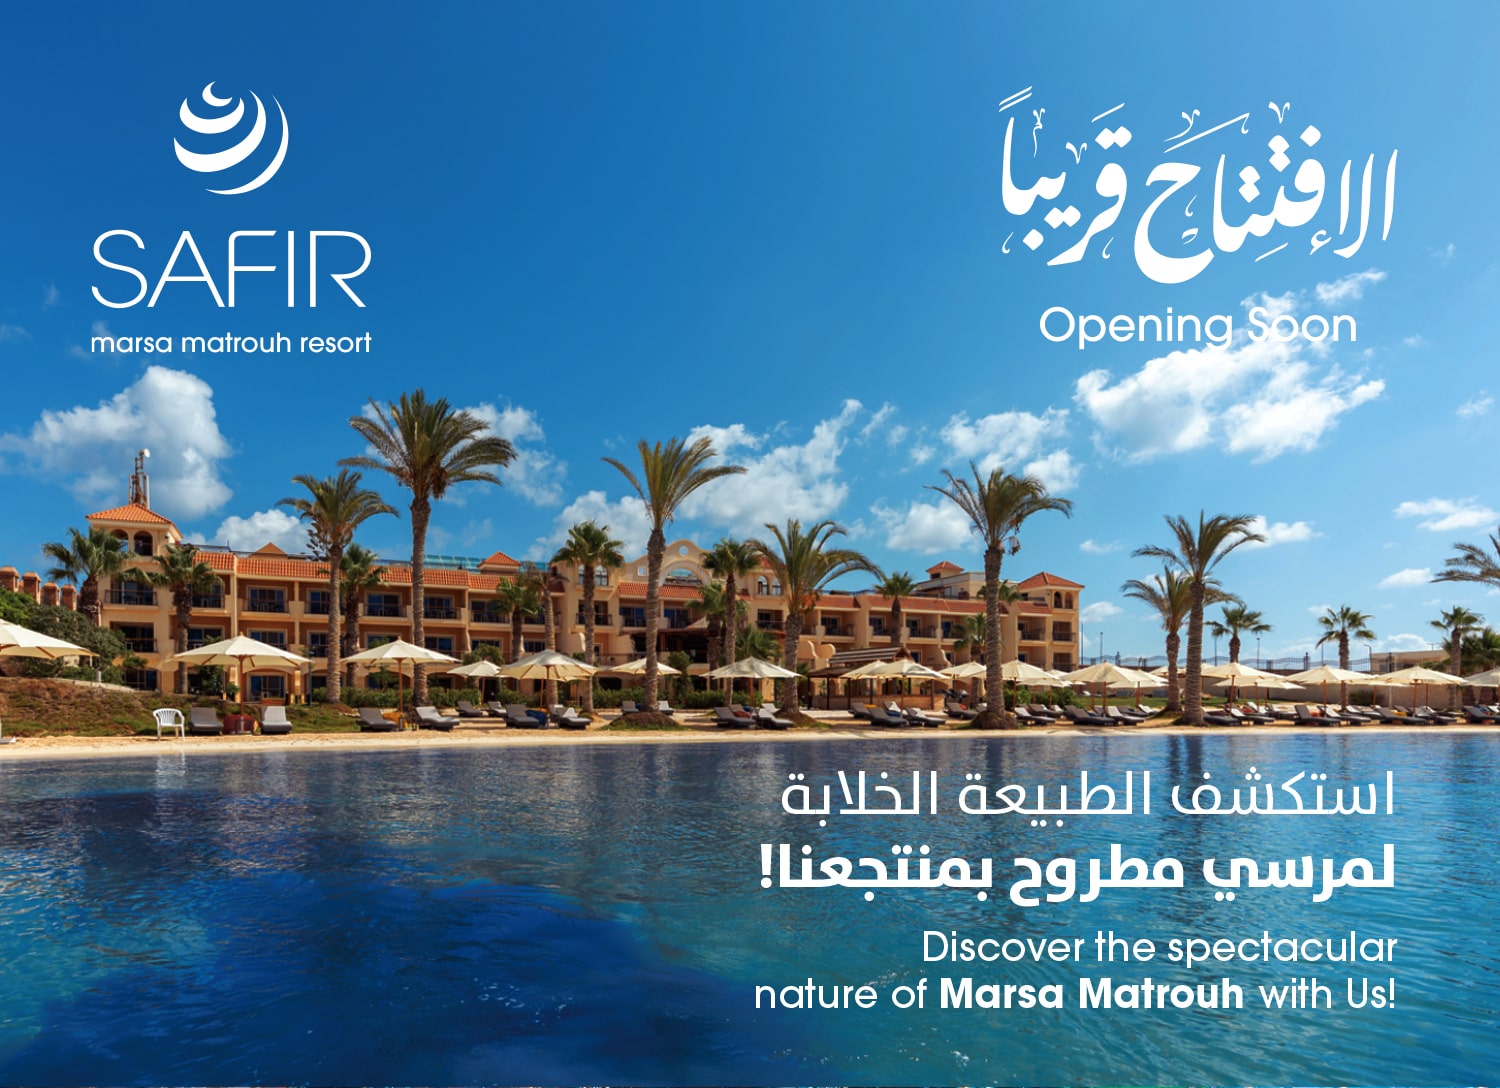 Adventure Awaits at our Safir Marsa Matrouh Resort!